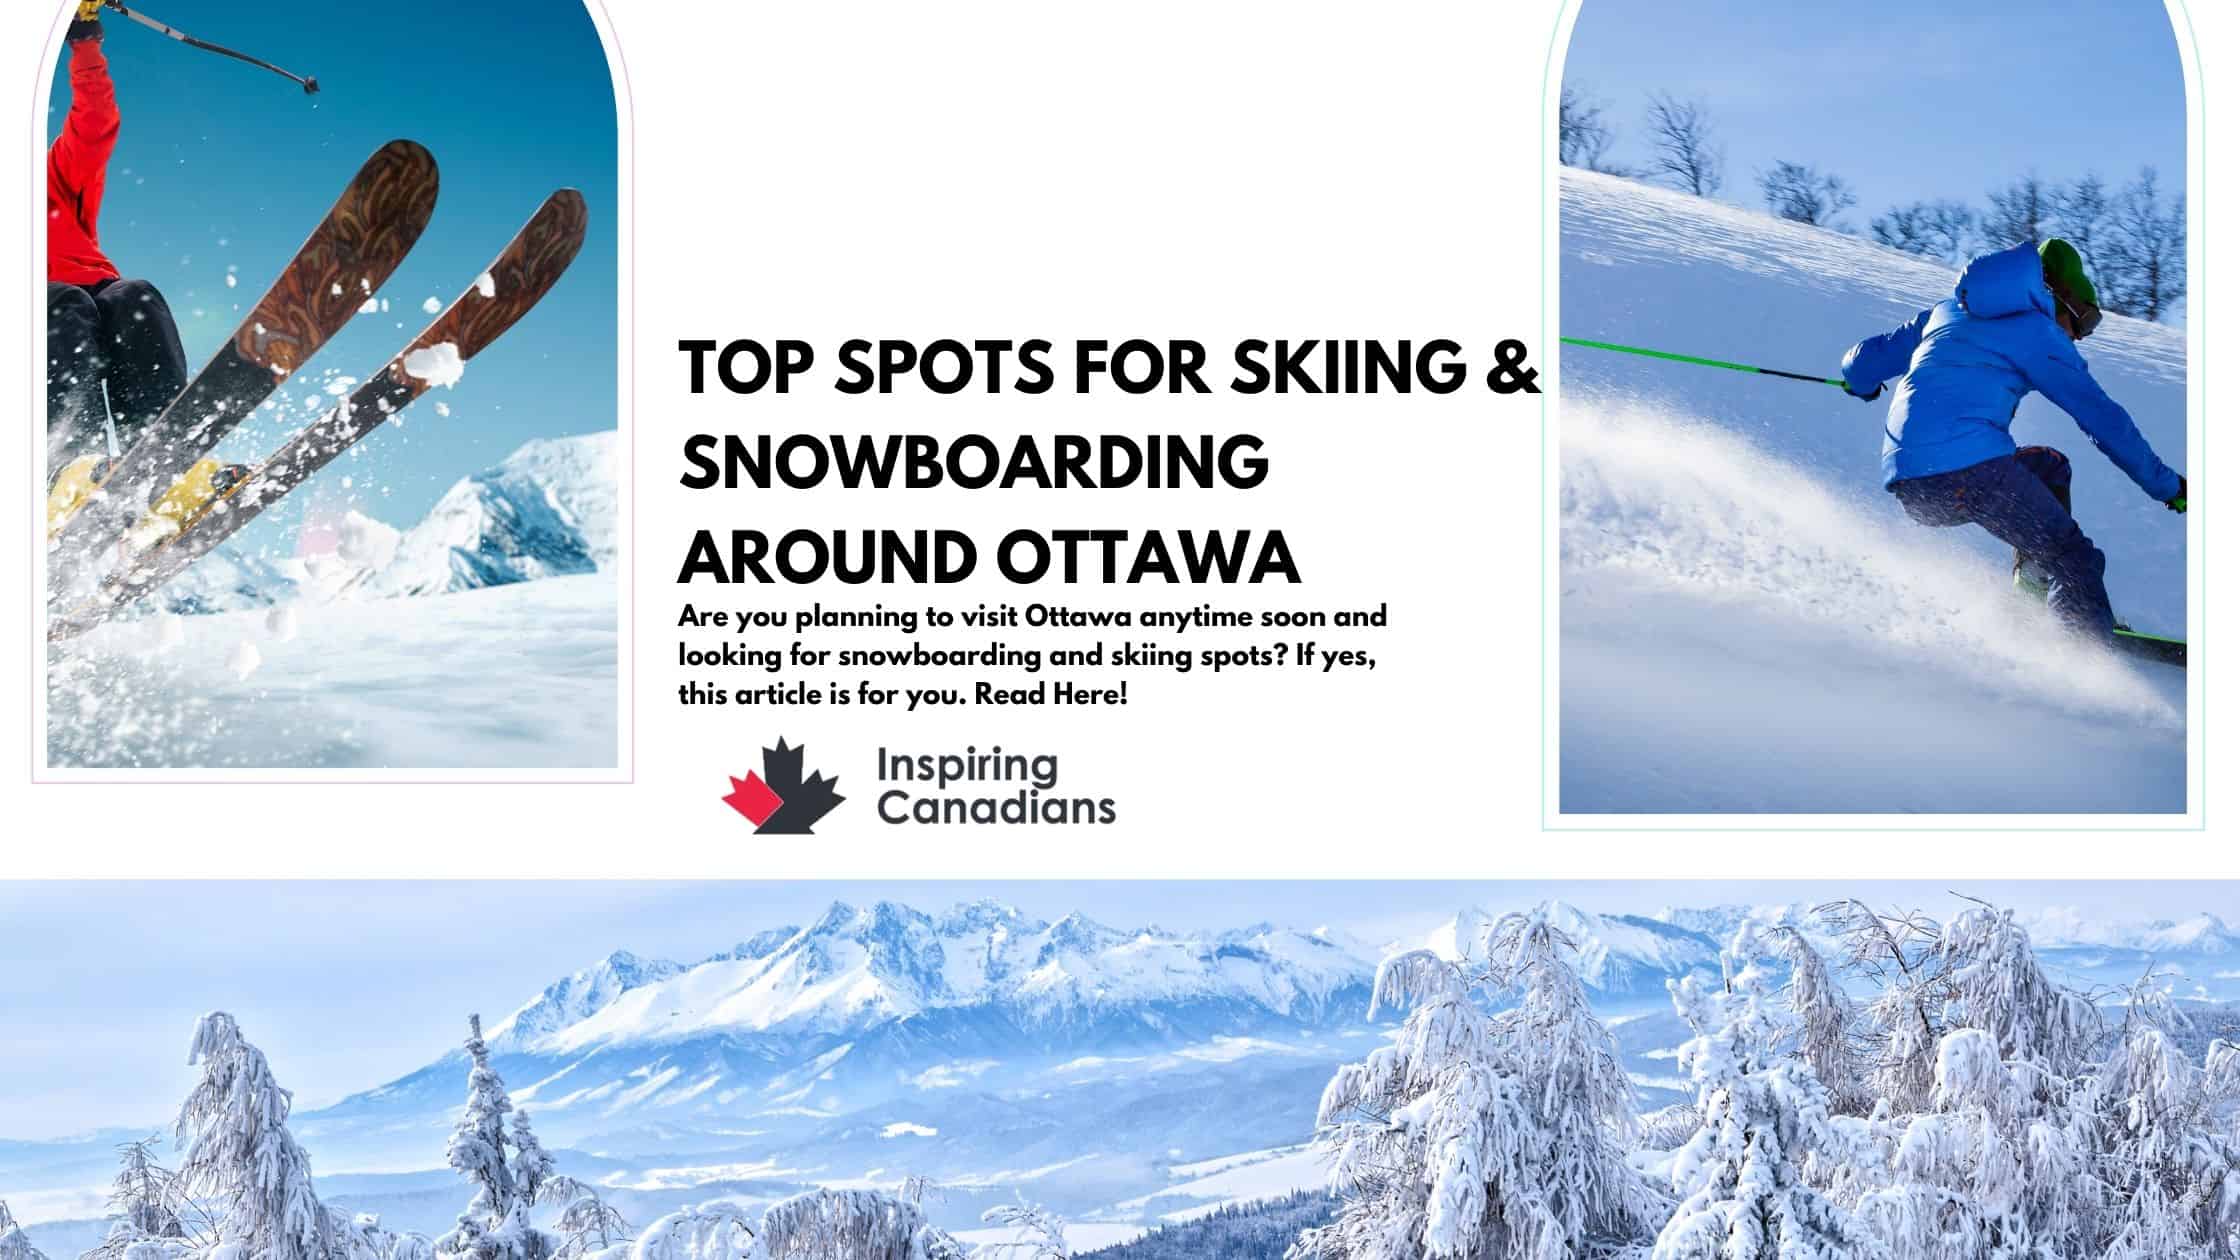 Top spots for skiing & Snowboarding around Ottawa